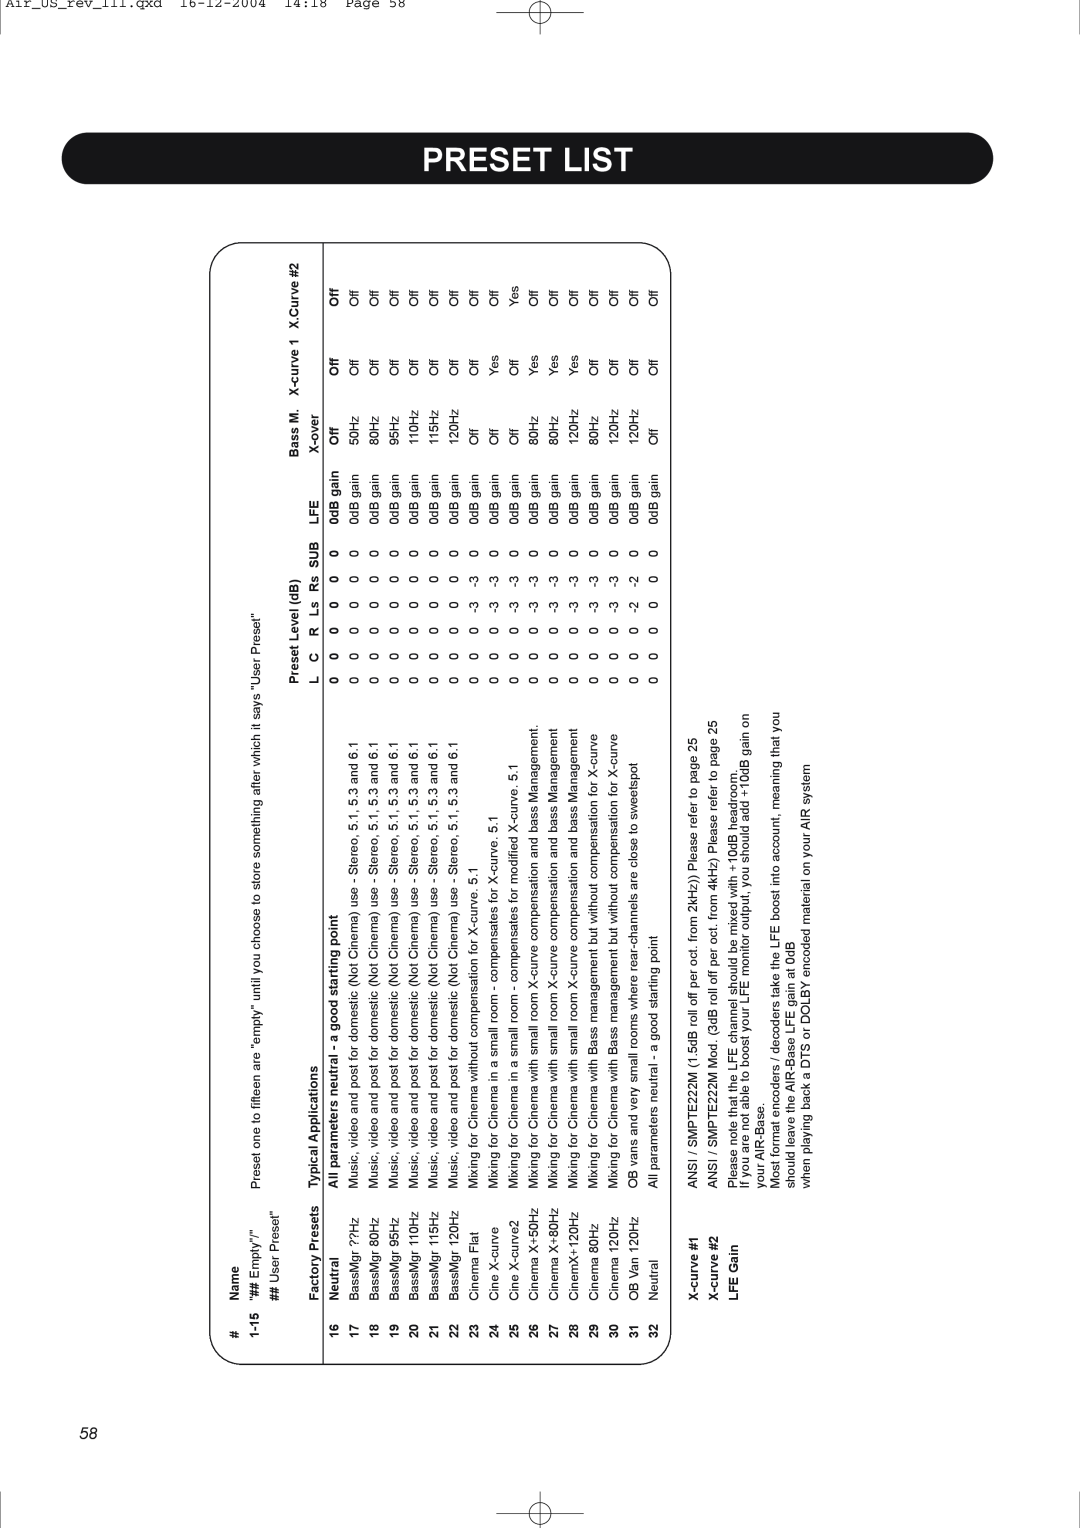 Dynaudio pmn manual Preset List, Air US rev 111.qxd 16-12-200414 18 Page 